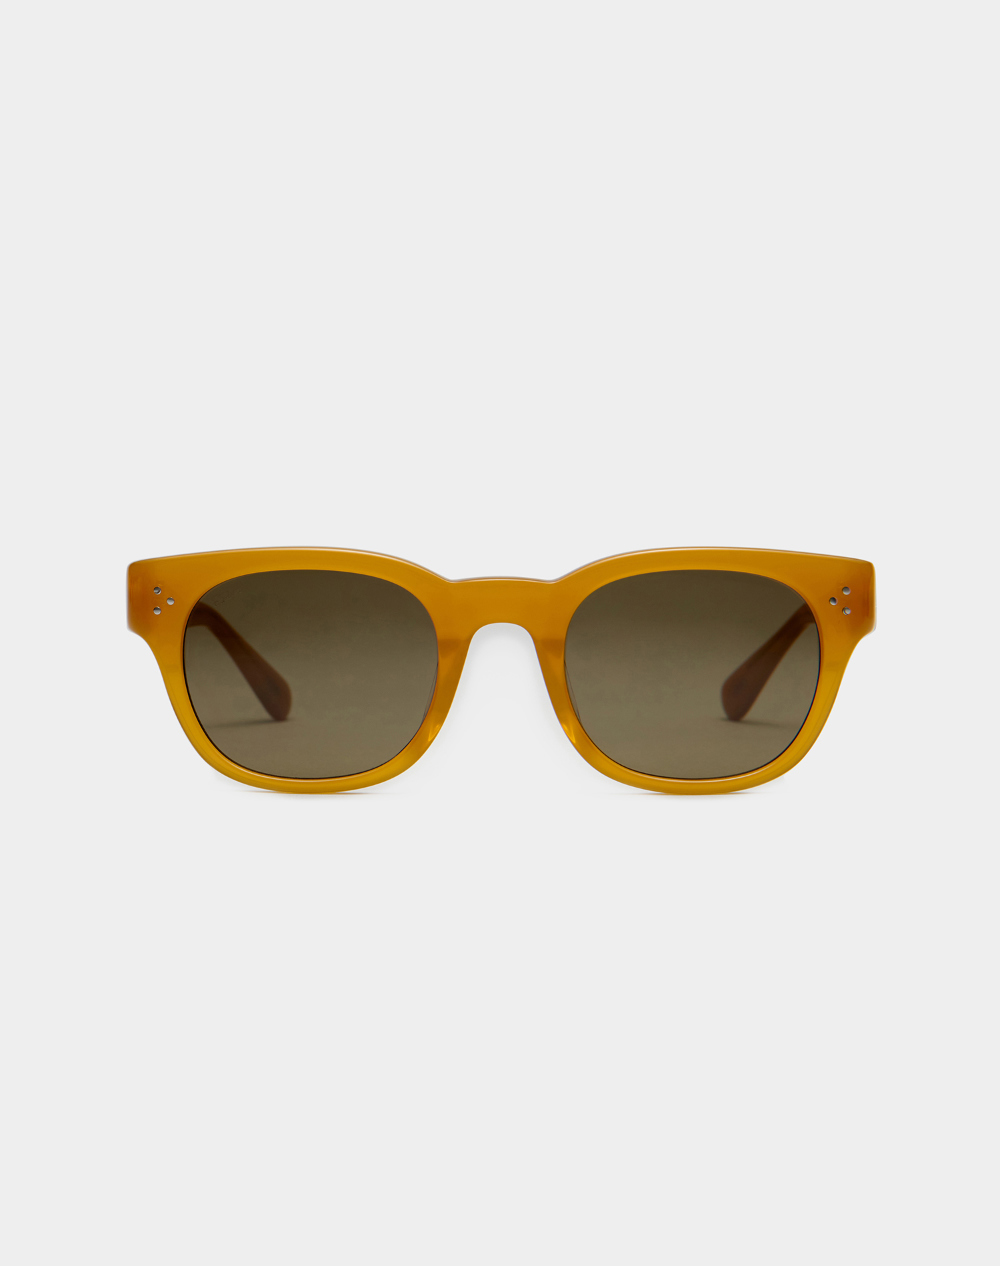 glasses oatmeal color image-S1L4